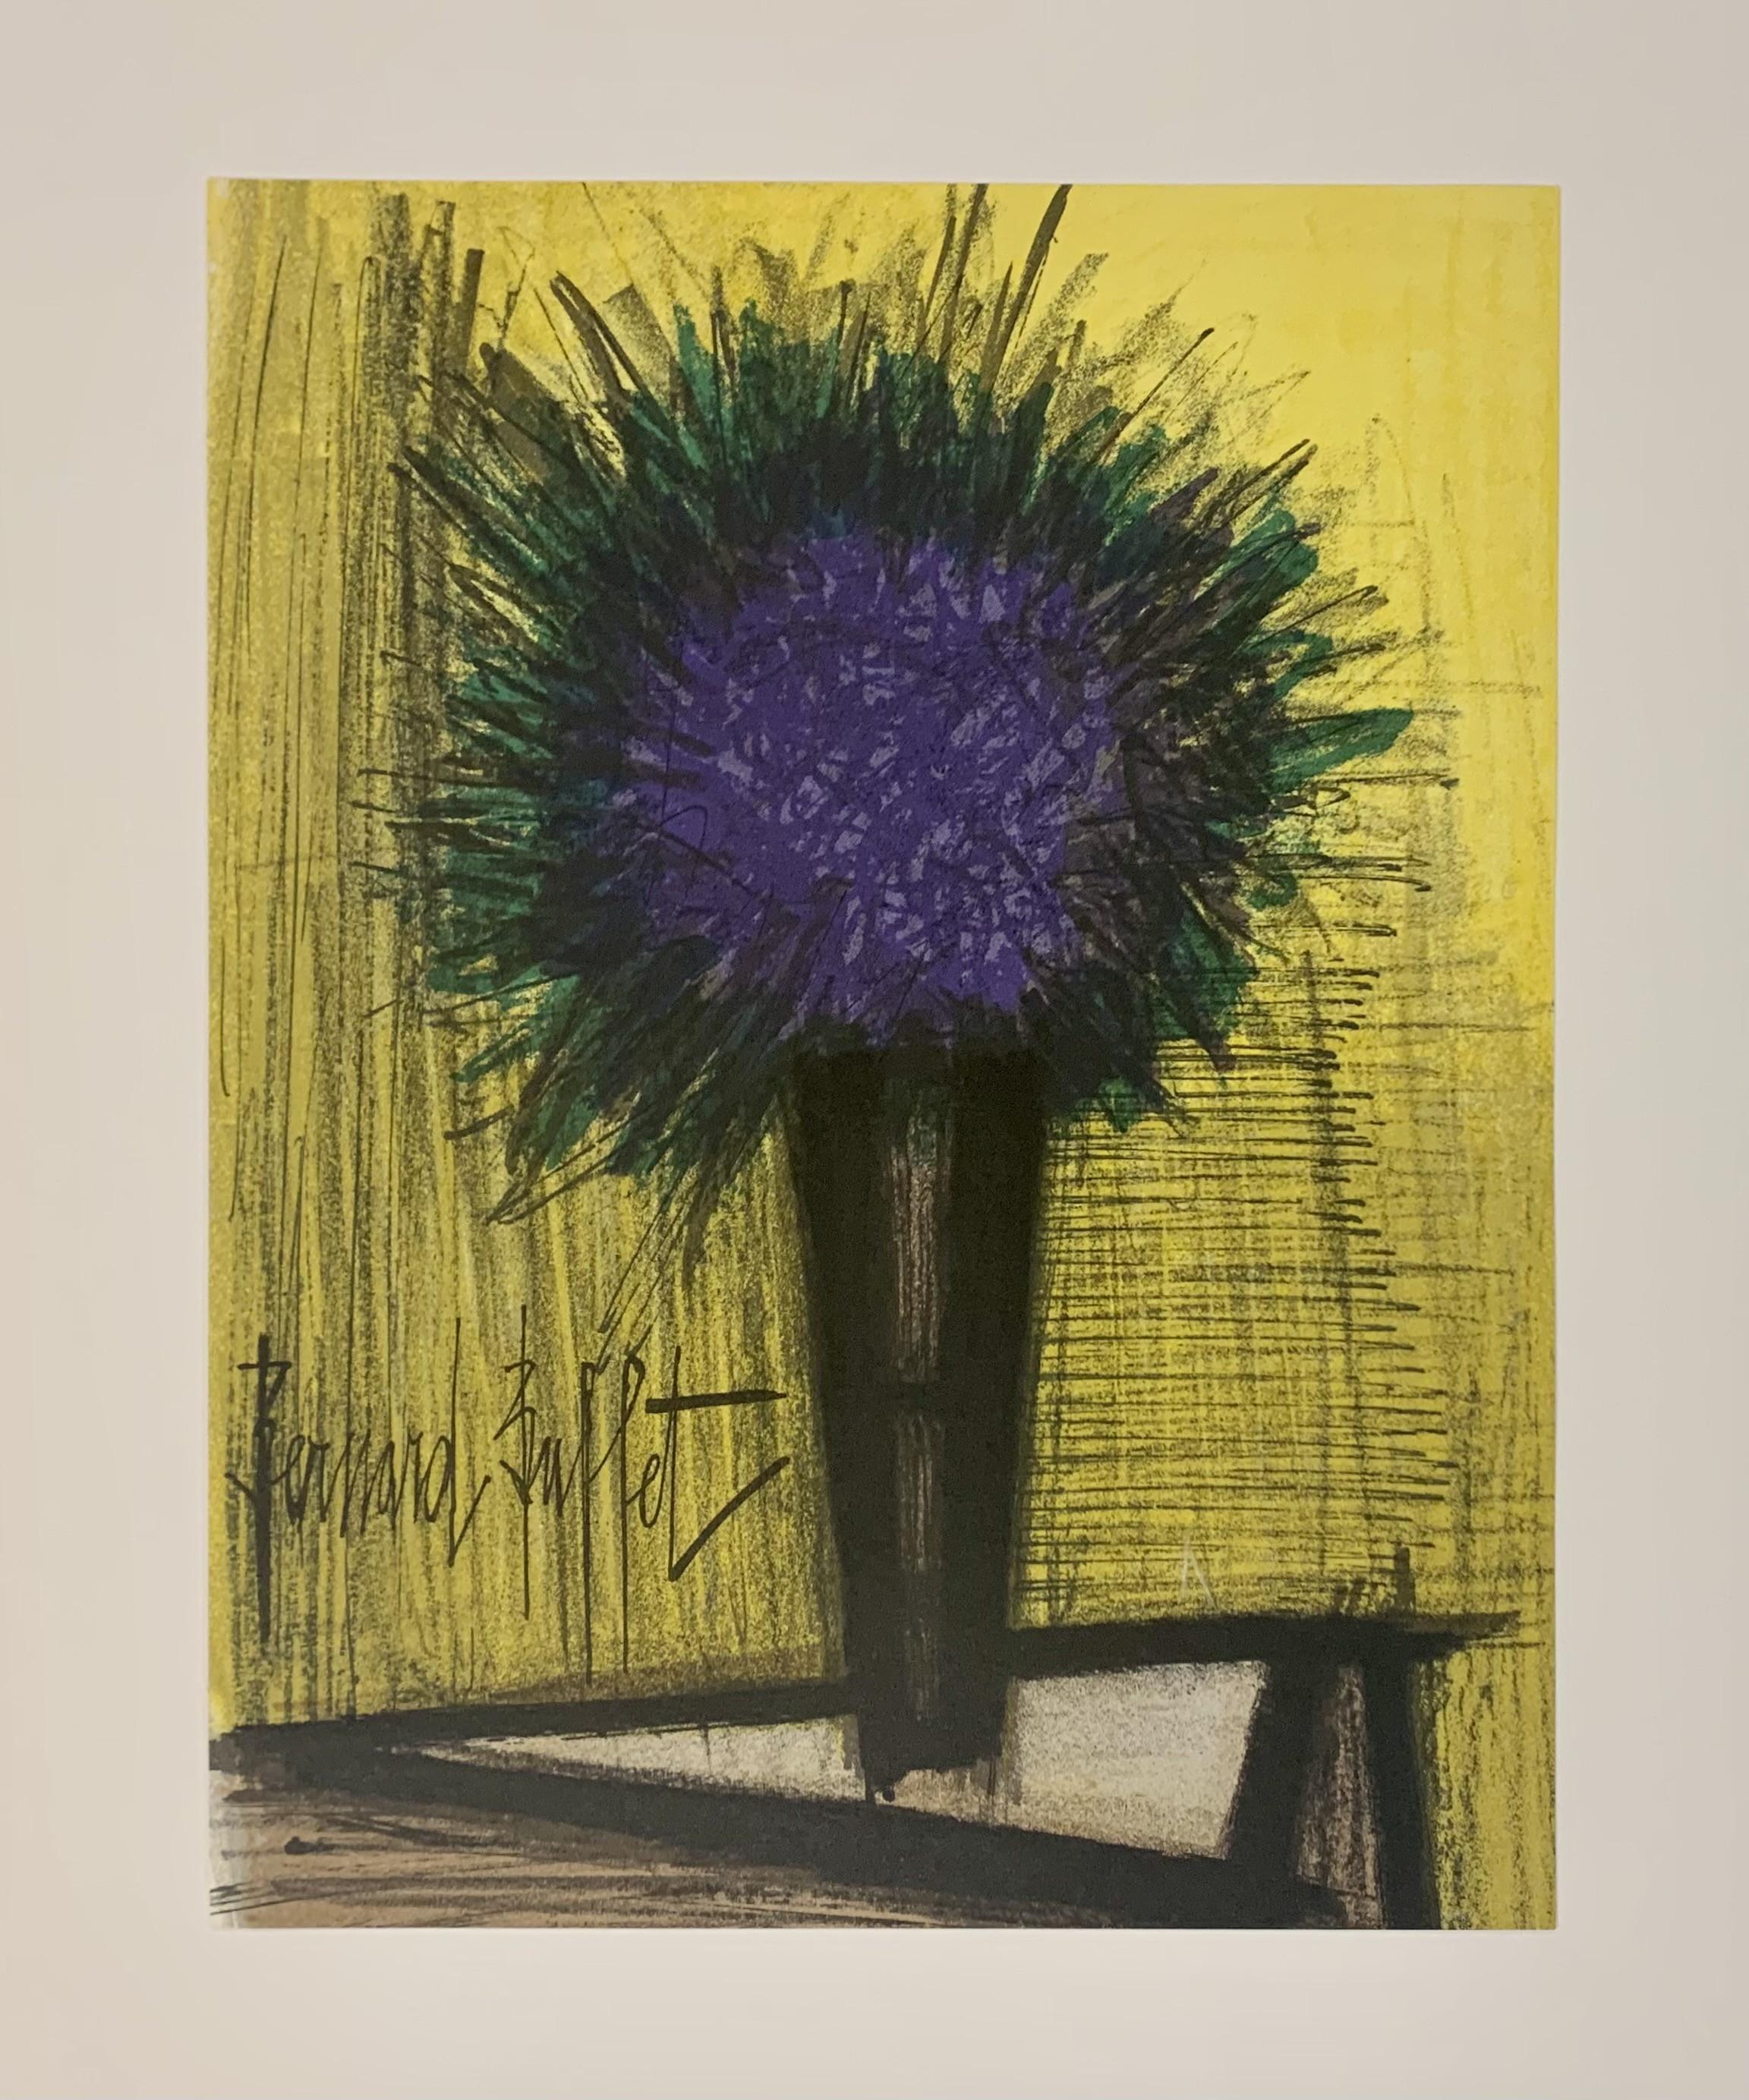 The Purple Bouquet of Flowers - Print by Bernard Buffet